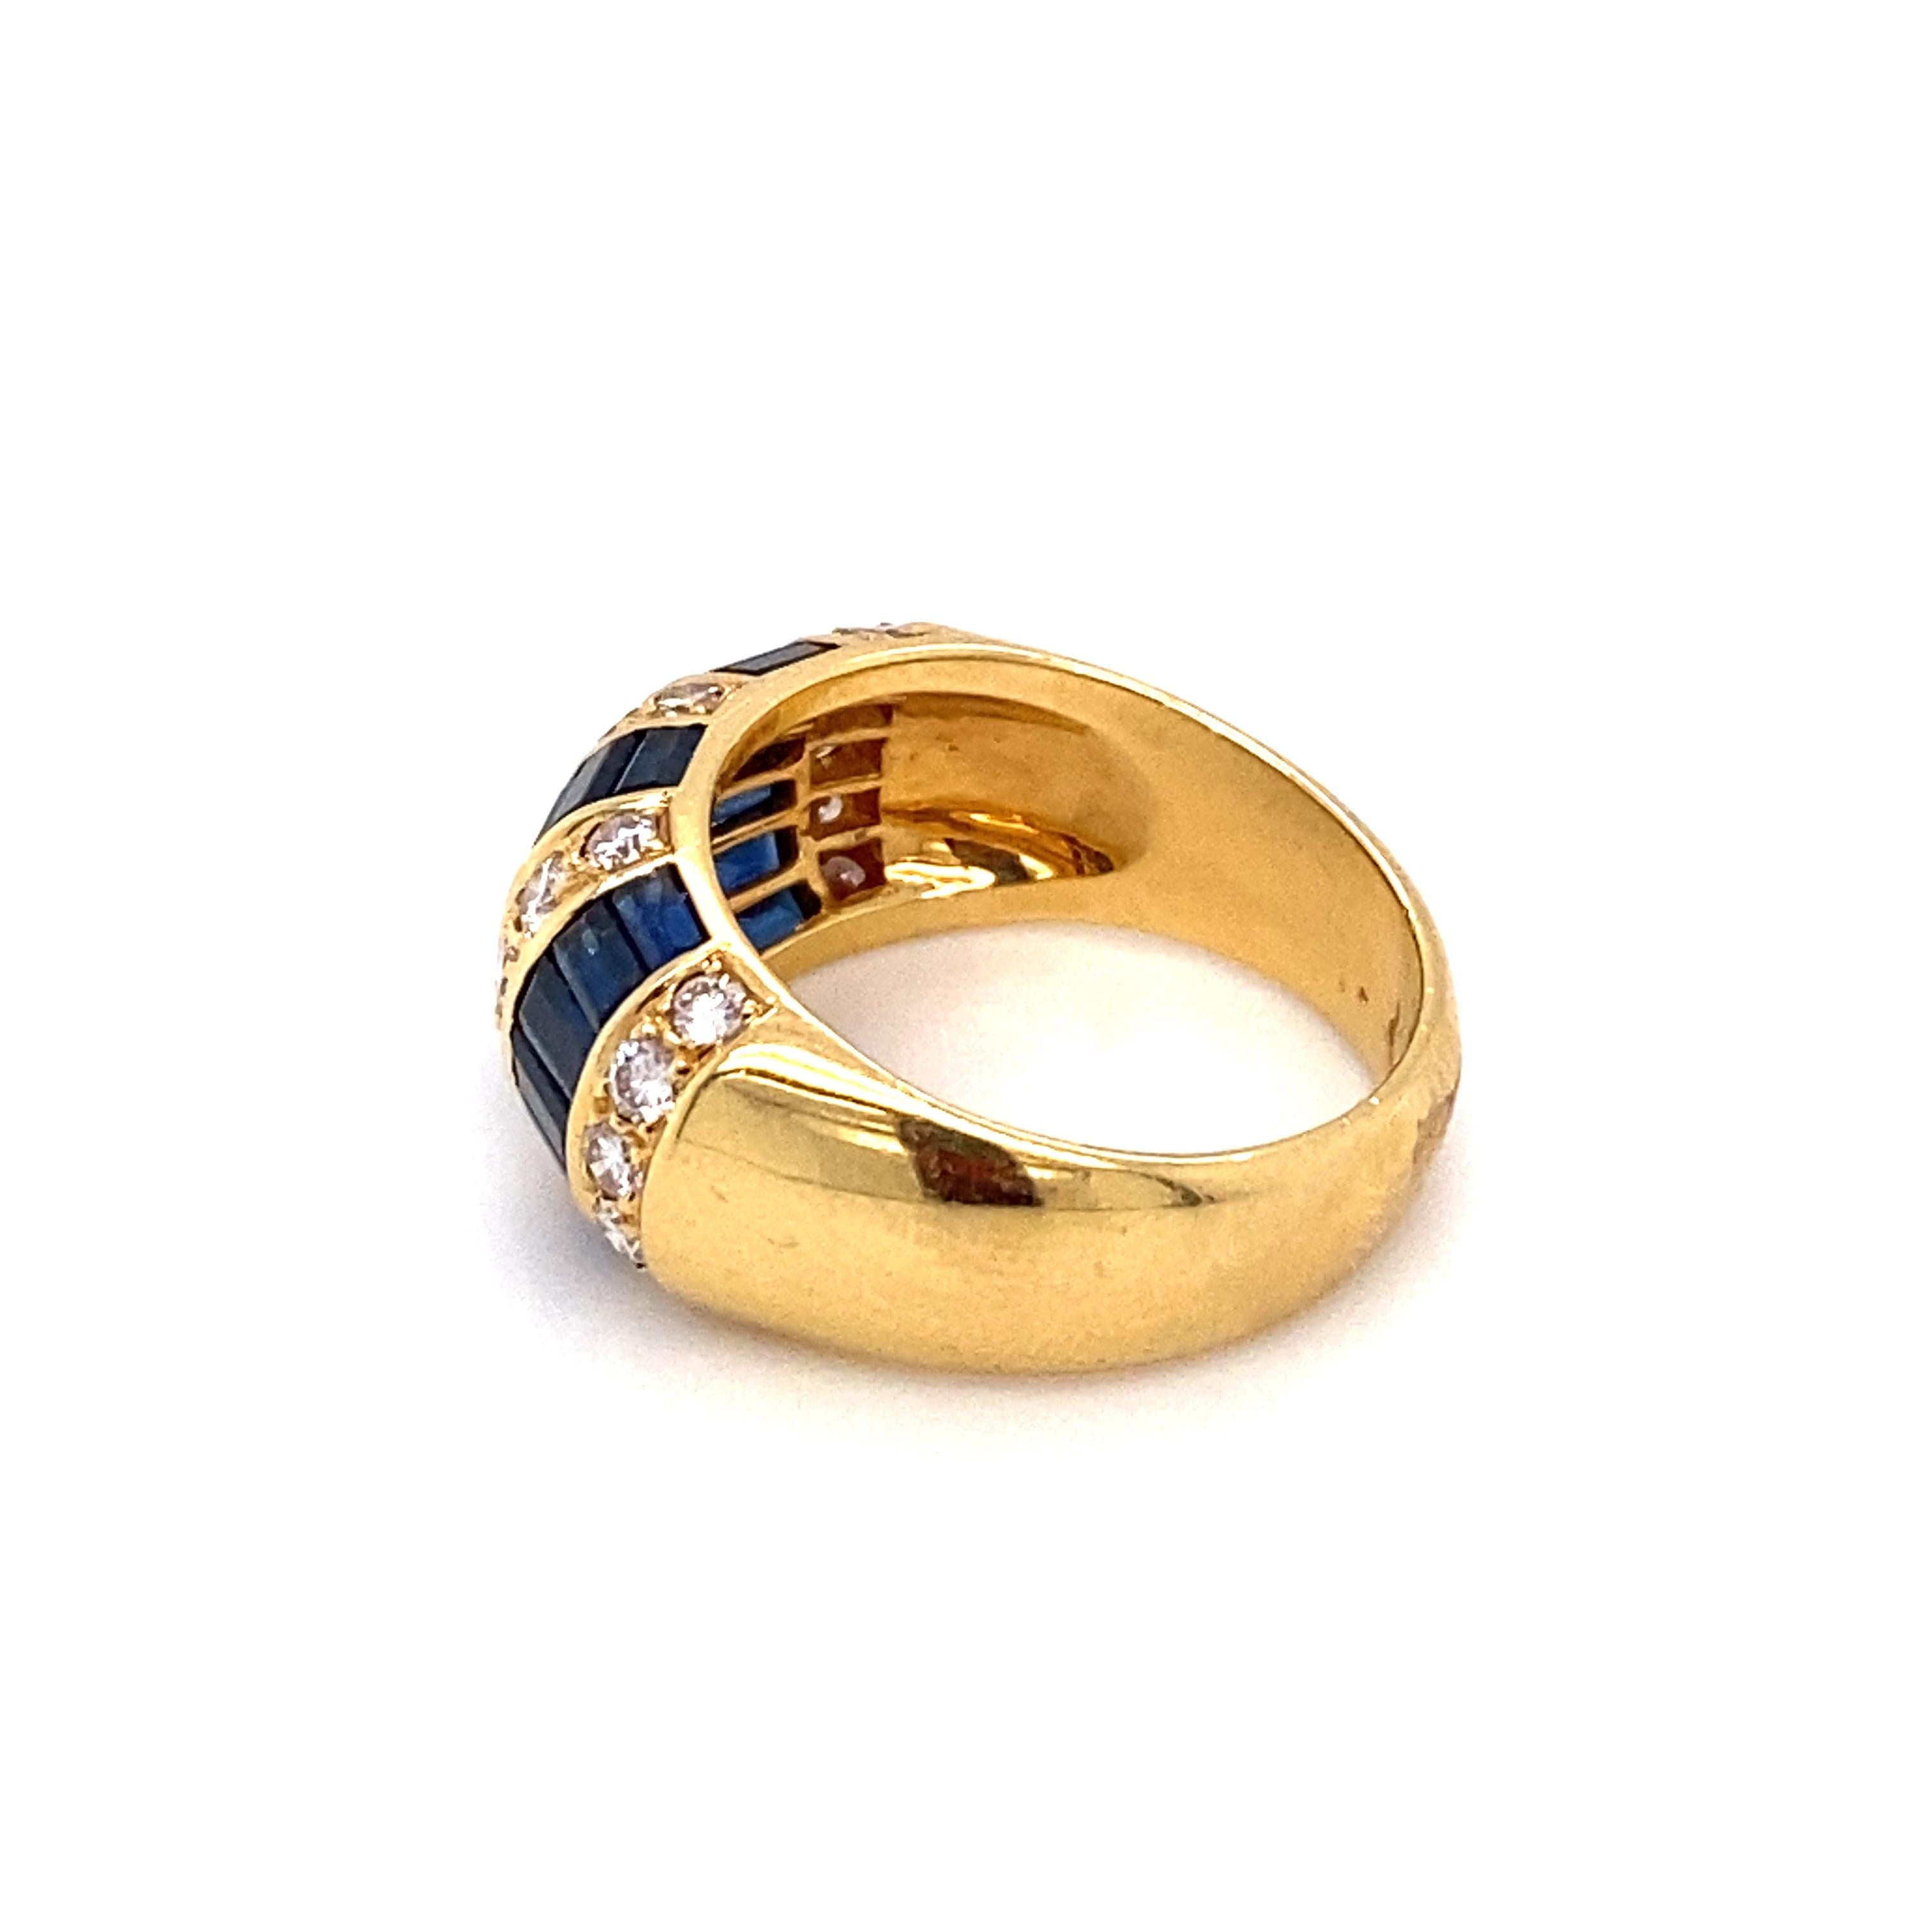 Baguette Cut 0.90 Carat Diamond and 1.10 Carat Sapphire Dome Ring in 18 Karat Gold